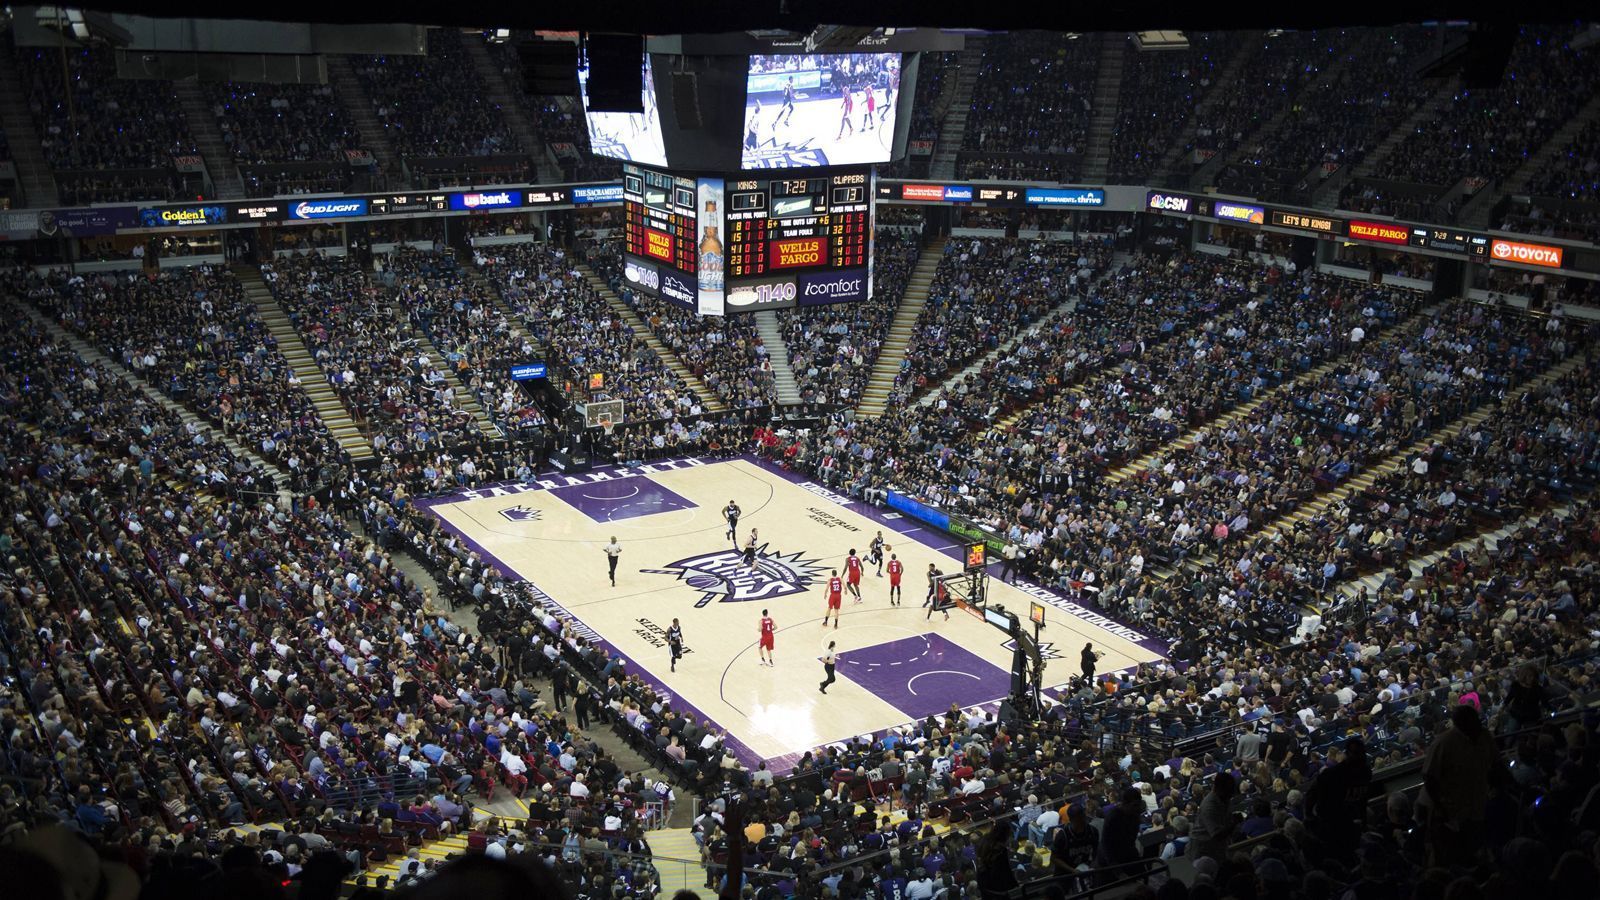 
                <strong>10. Platz: Sleep Train Arena, Sacramento</strong><br>
                Ehemalige Spielstätte der Sacramento Kings (NBA)Höchstgemessene Lautstärke: 126.0 dB
              